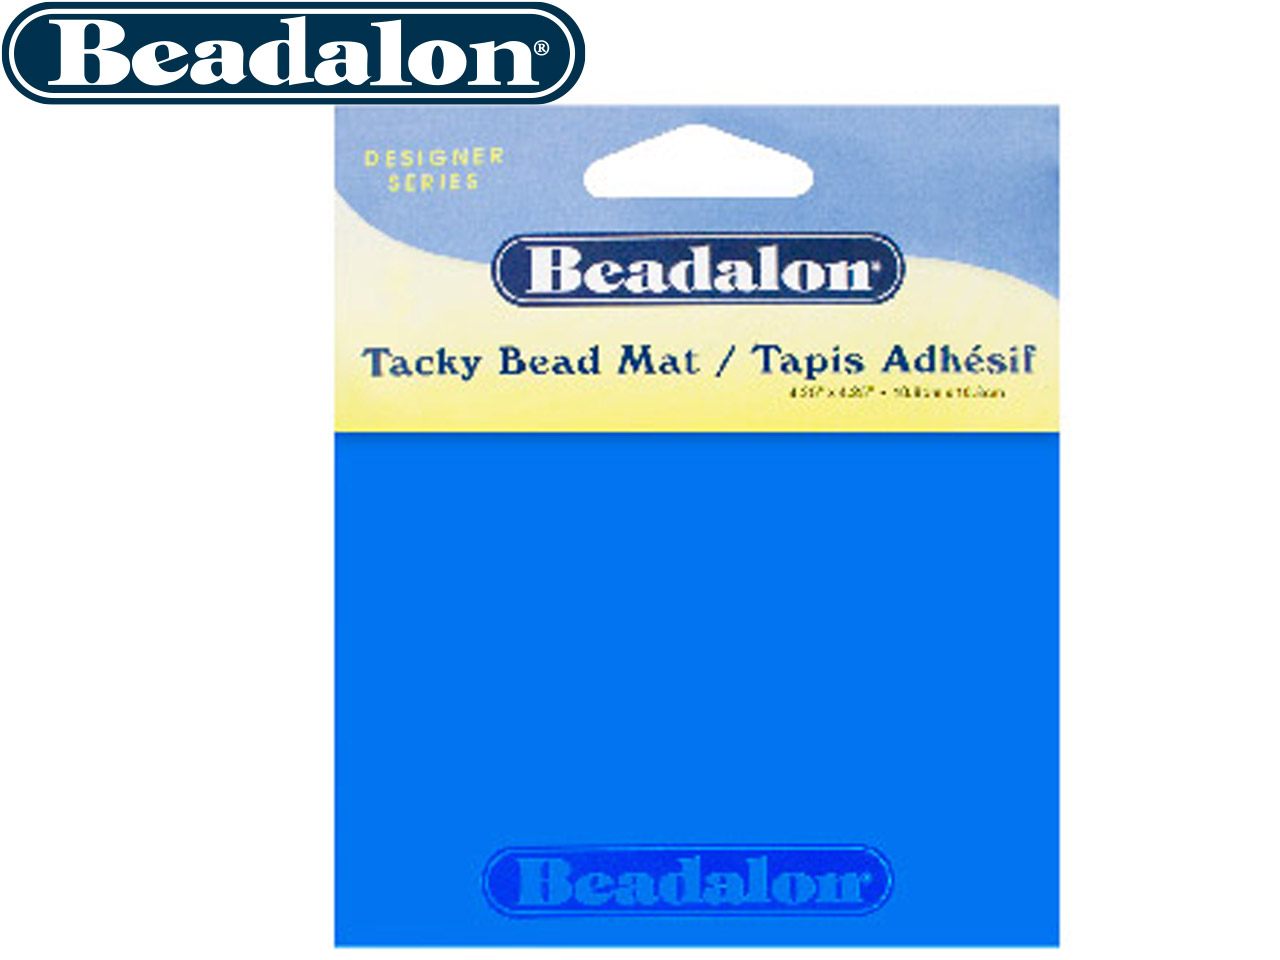 Tapis adhésif pour perles, Beadalon - Image Standard - 2